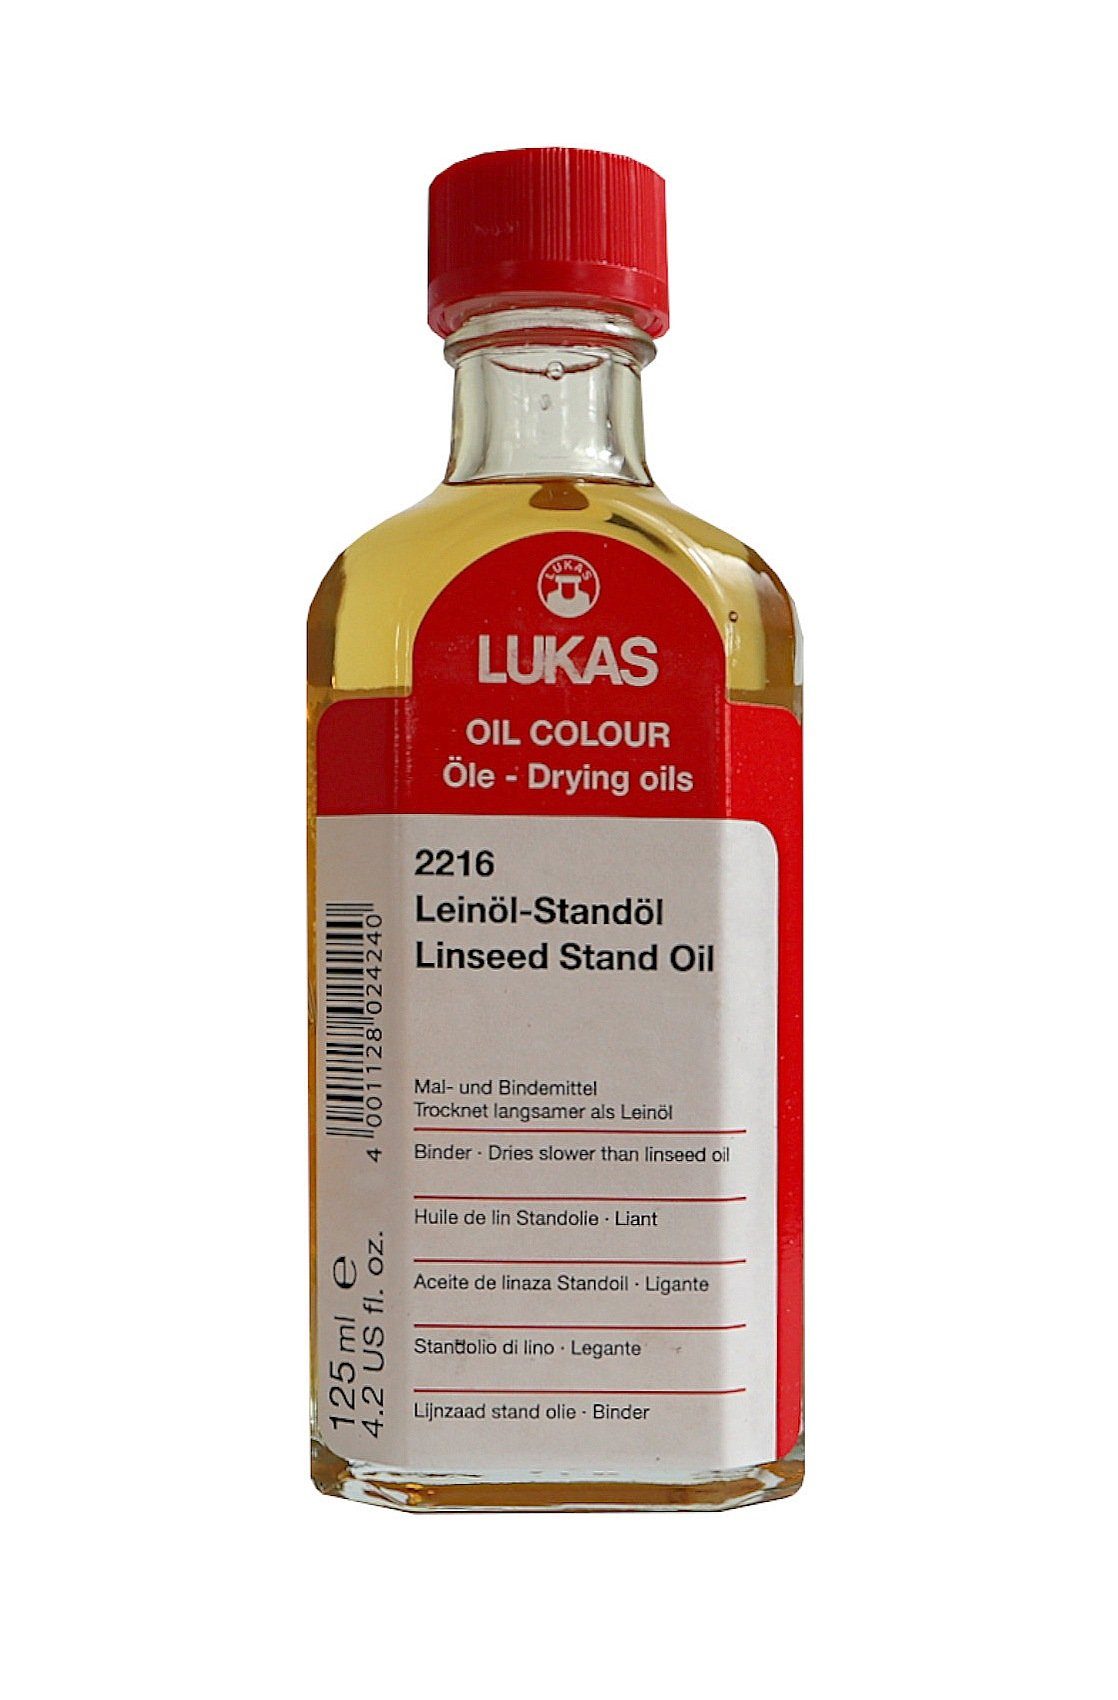 Lukas-Nerchau GmbH Leinölfirnis LUKAS 125 ml Leinöl-Standöl 2216 